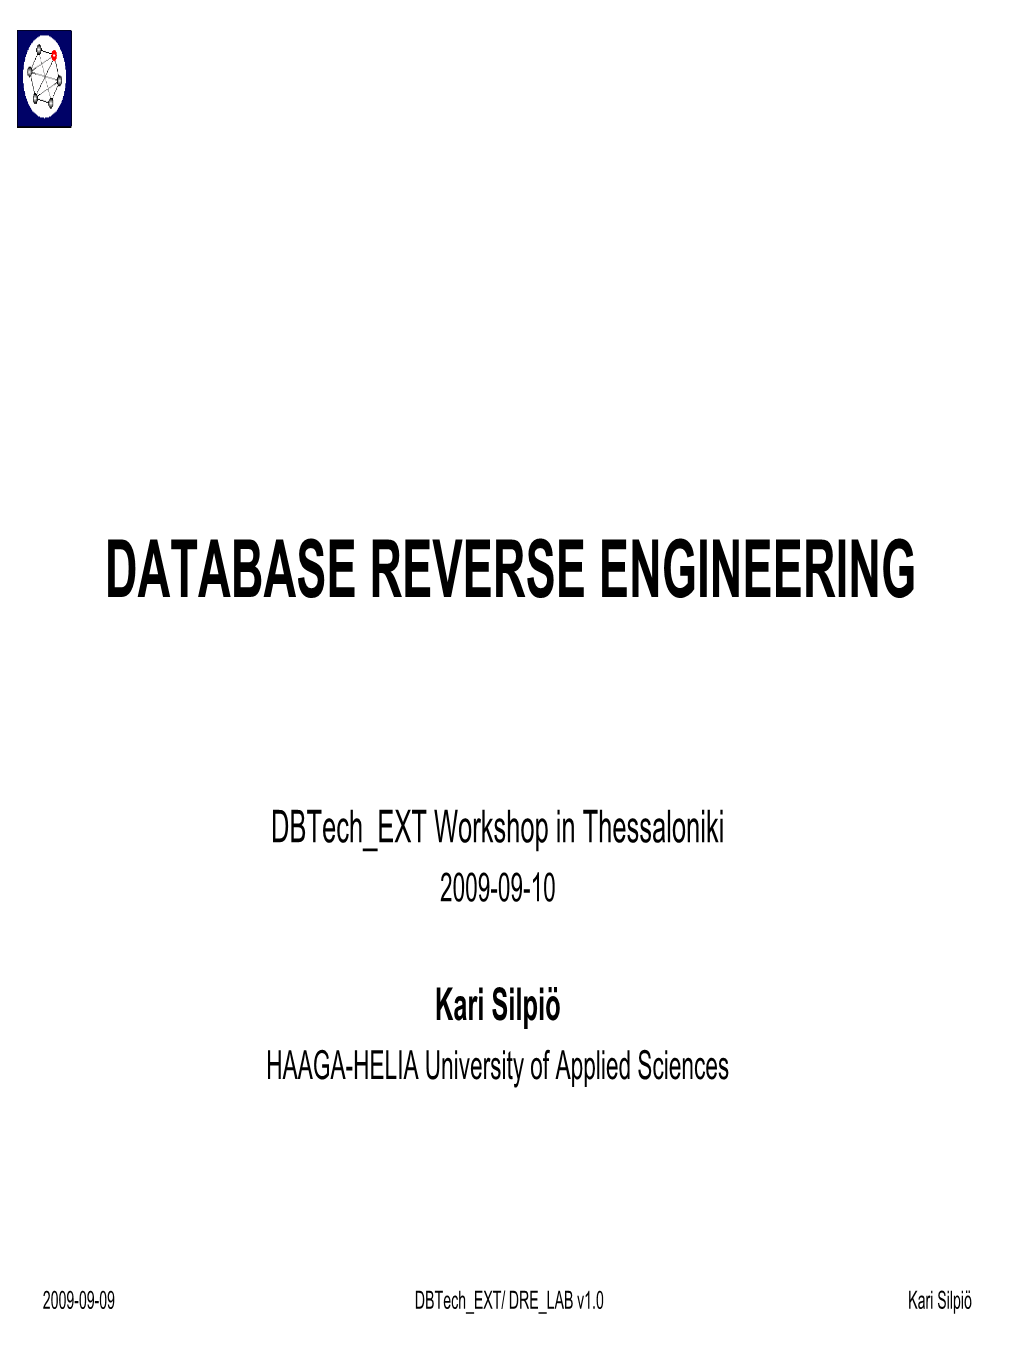 Database Reverse Engineering